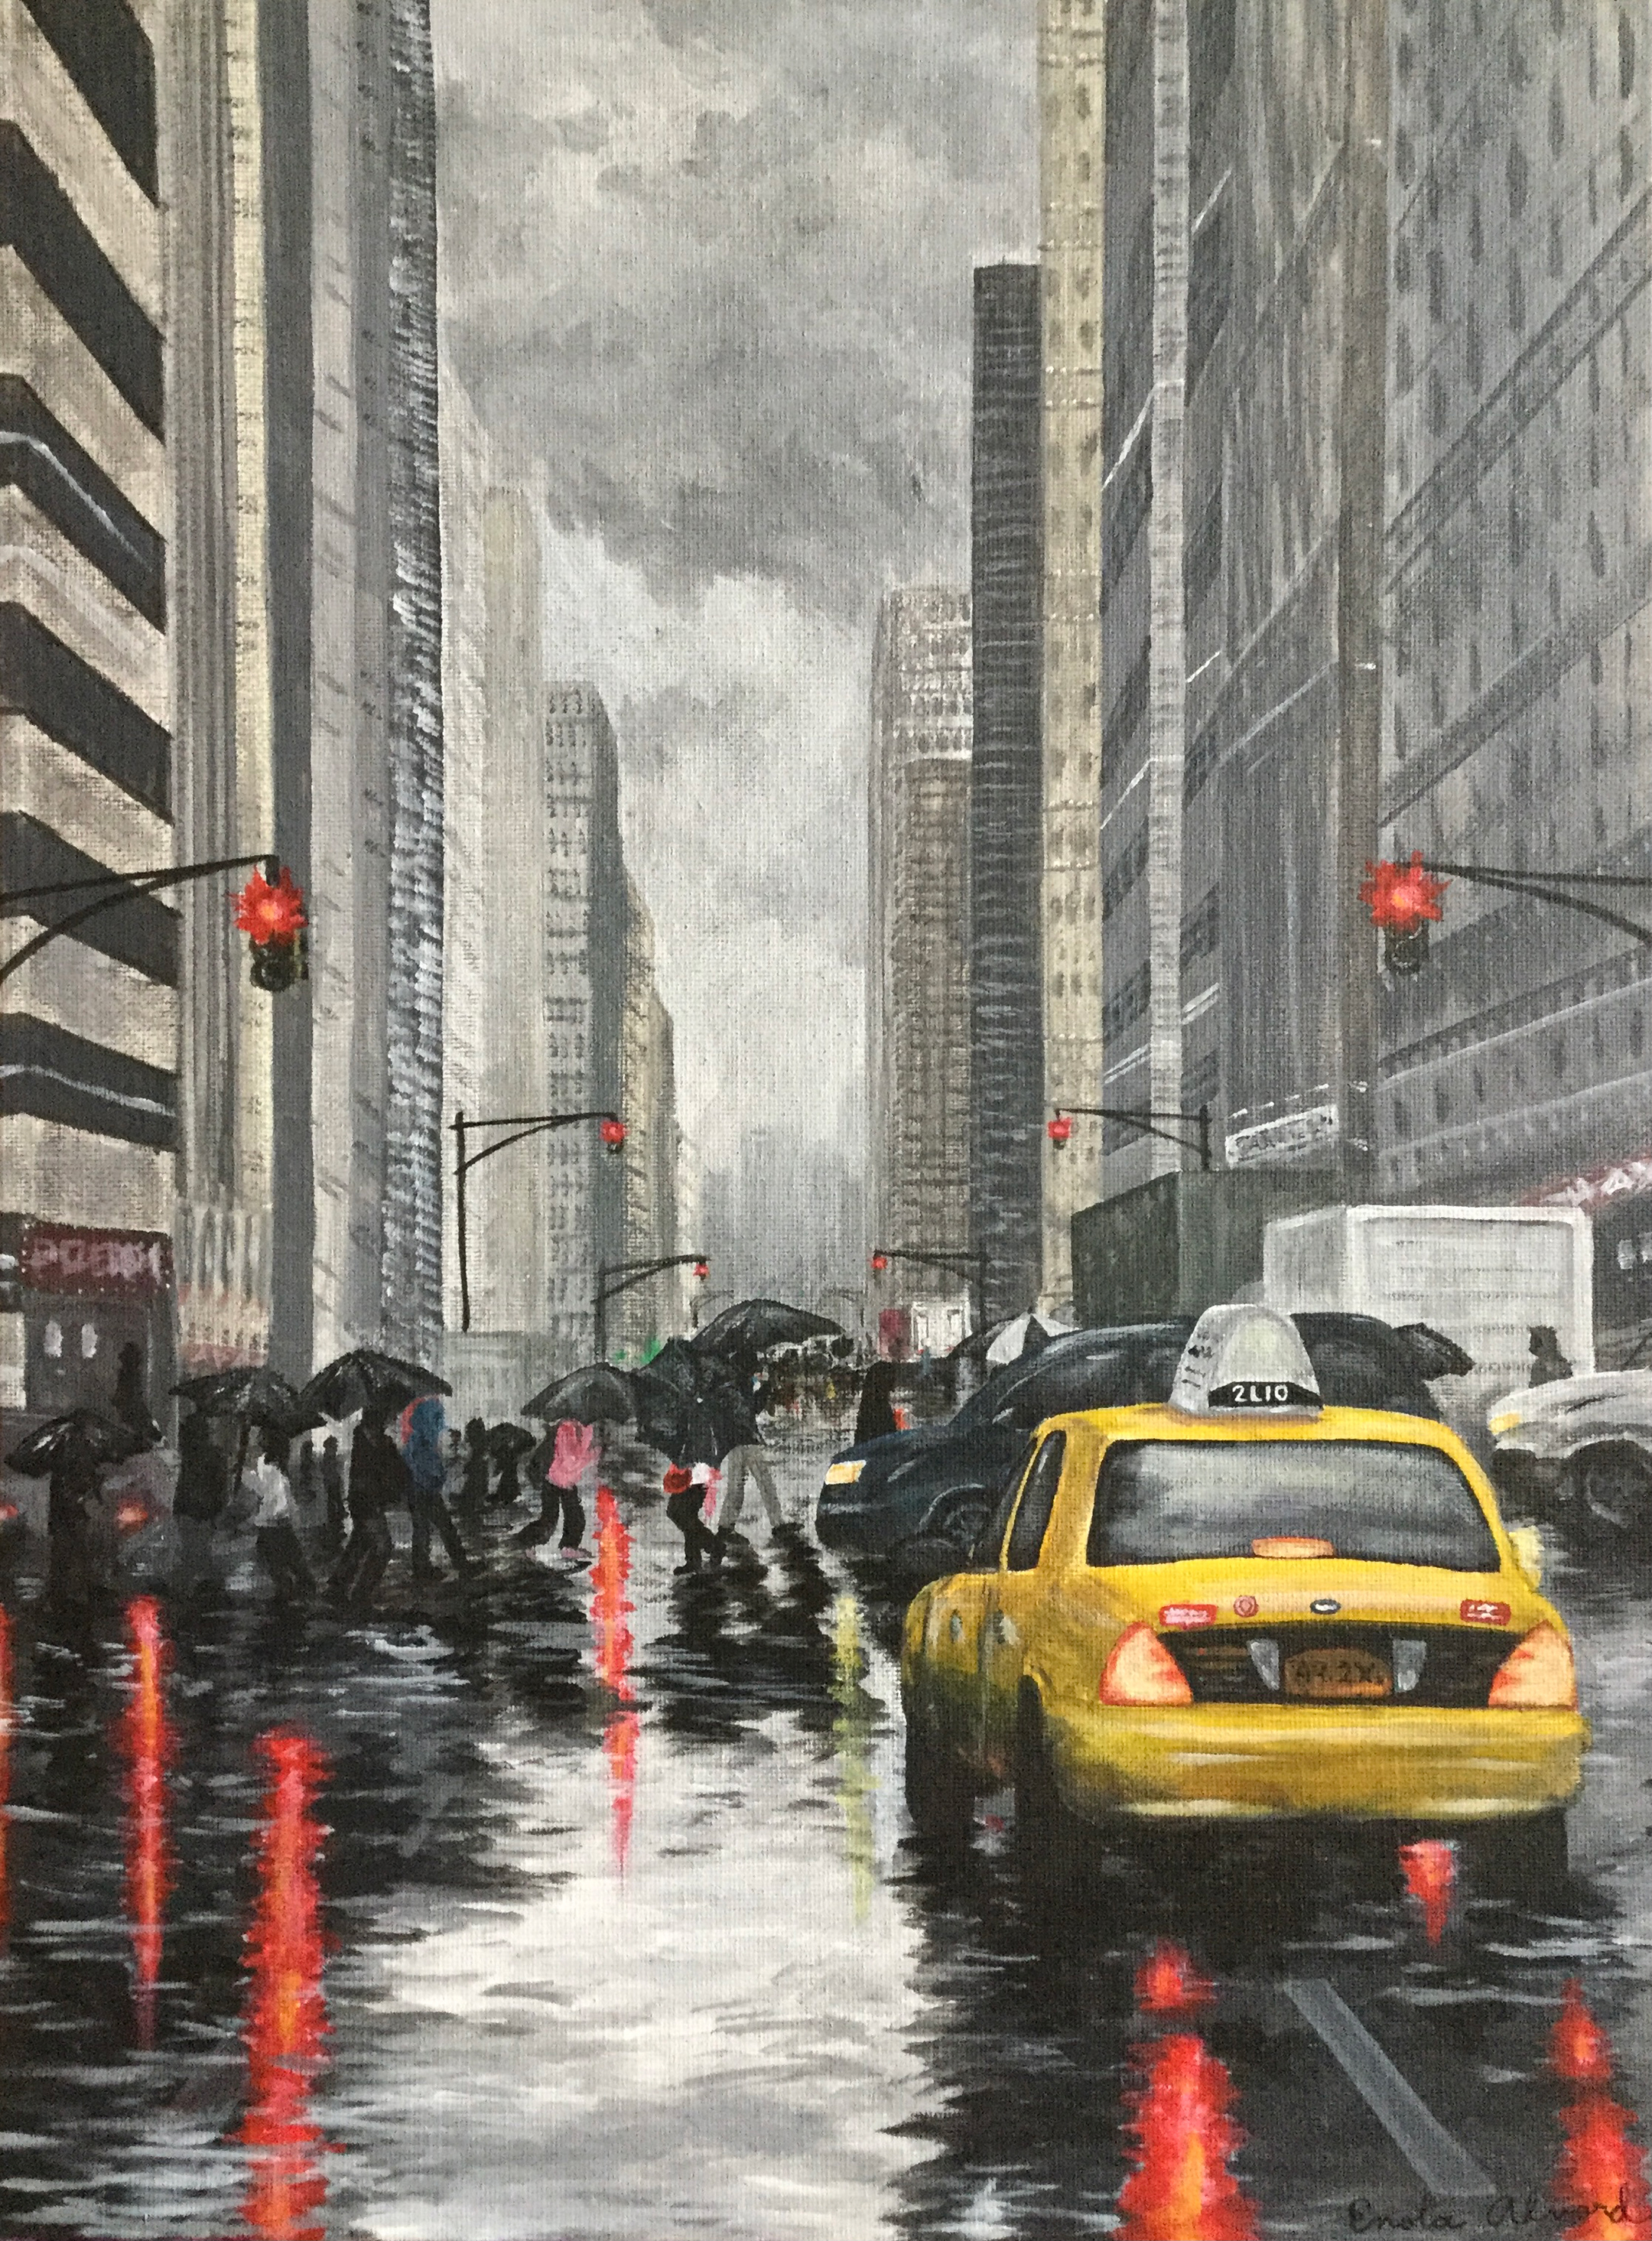 Painting of a rainy New York City street scene